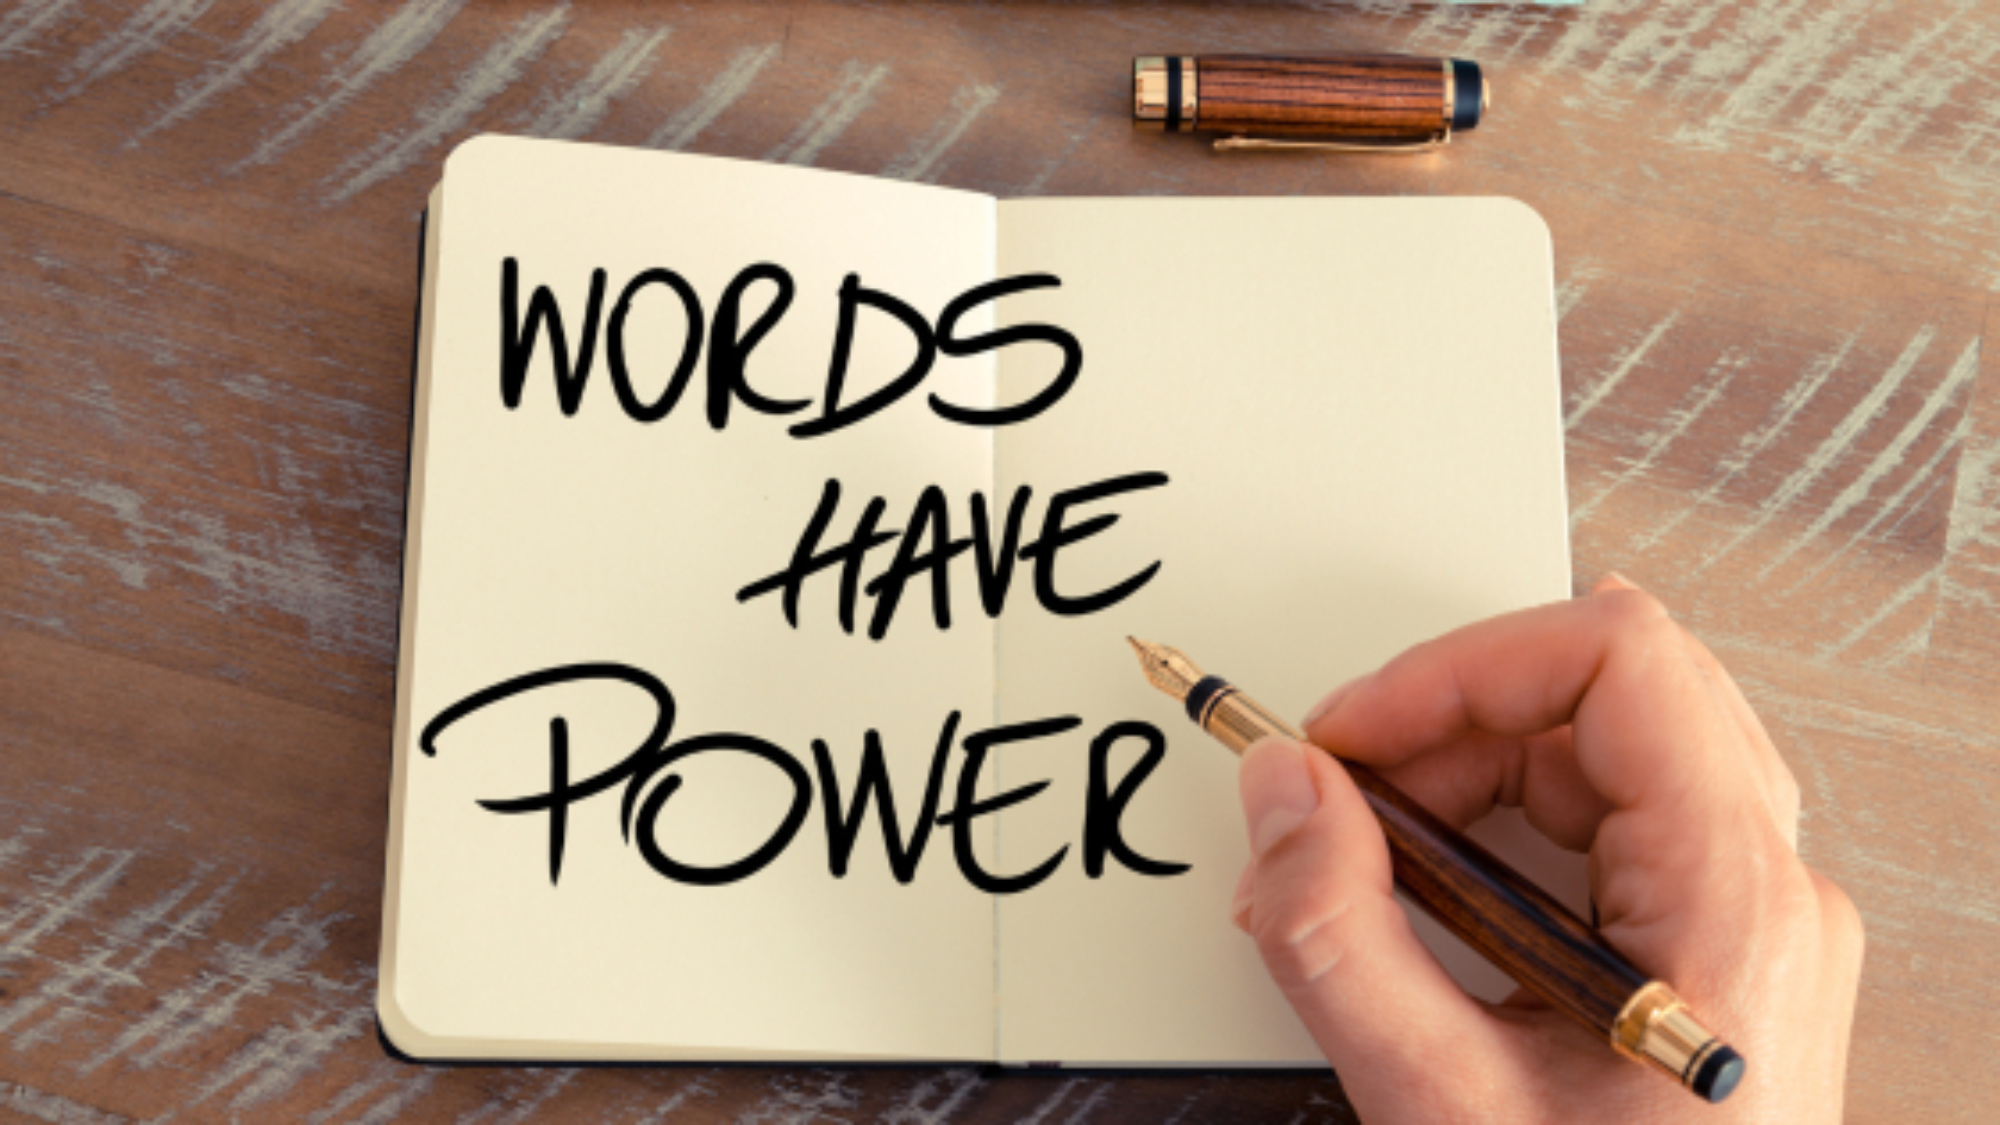 words_power